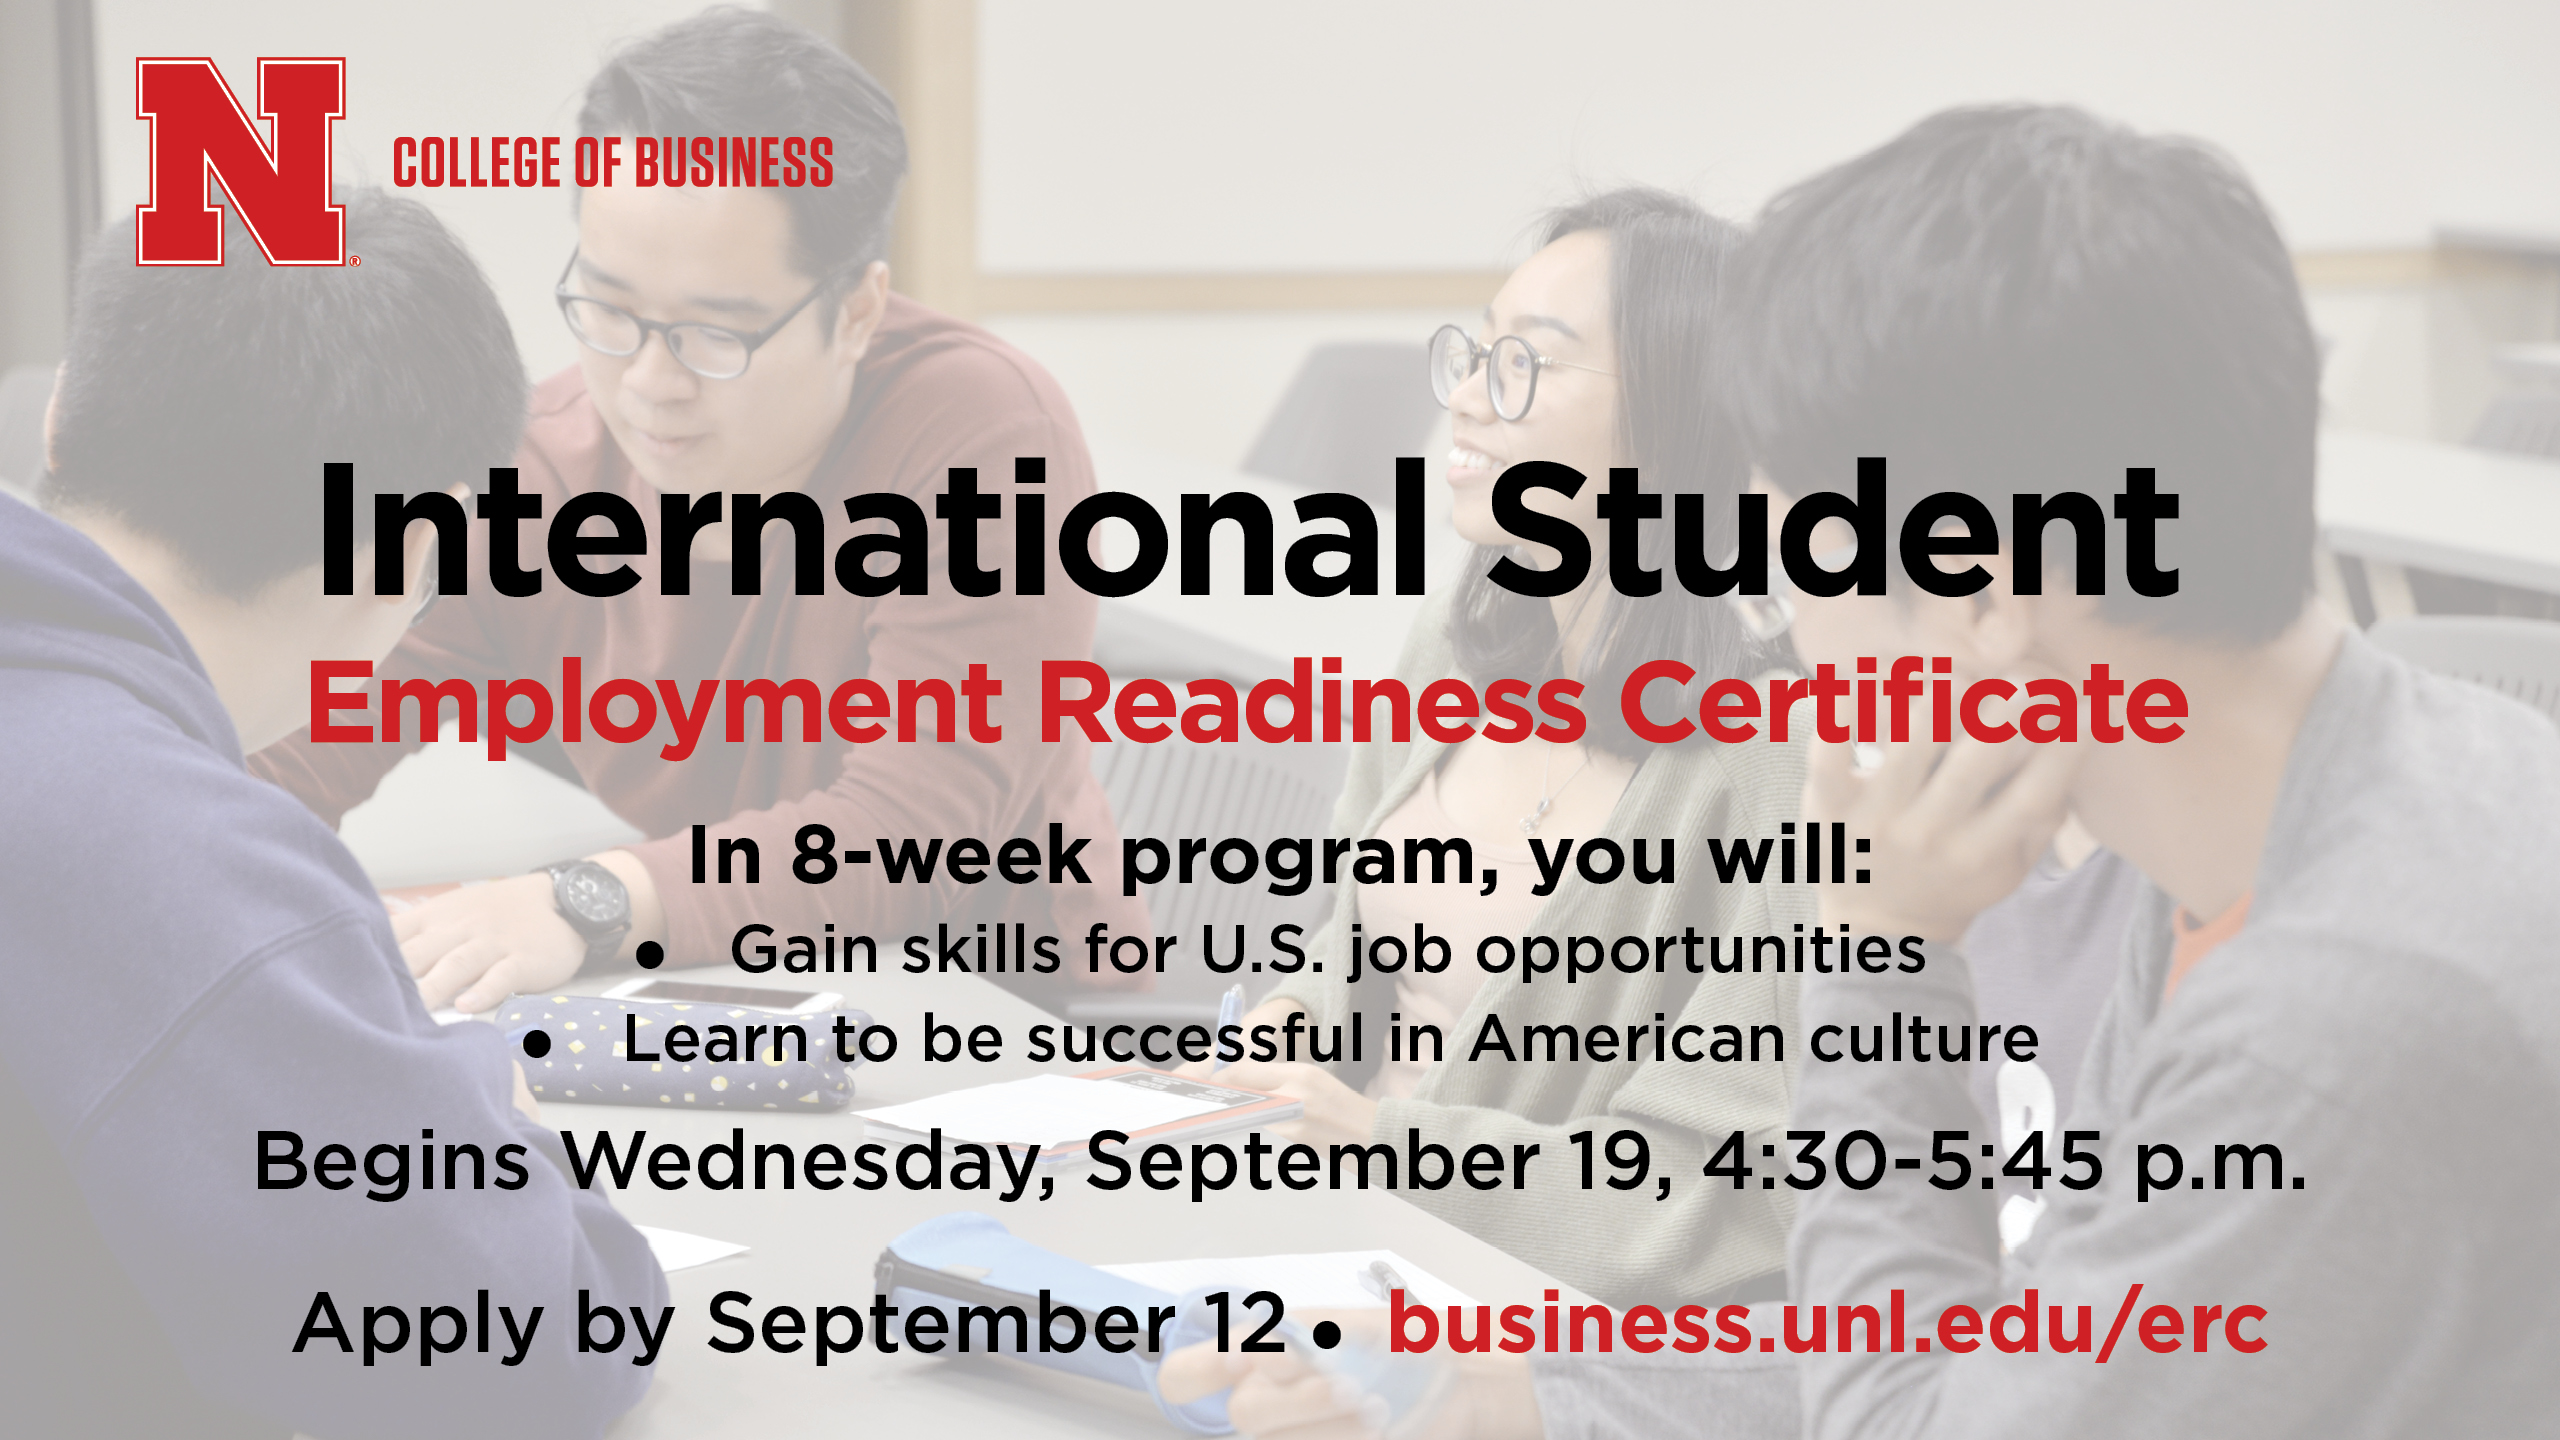 International Student Employment Readiness Certificate program begins September 19.